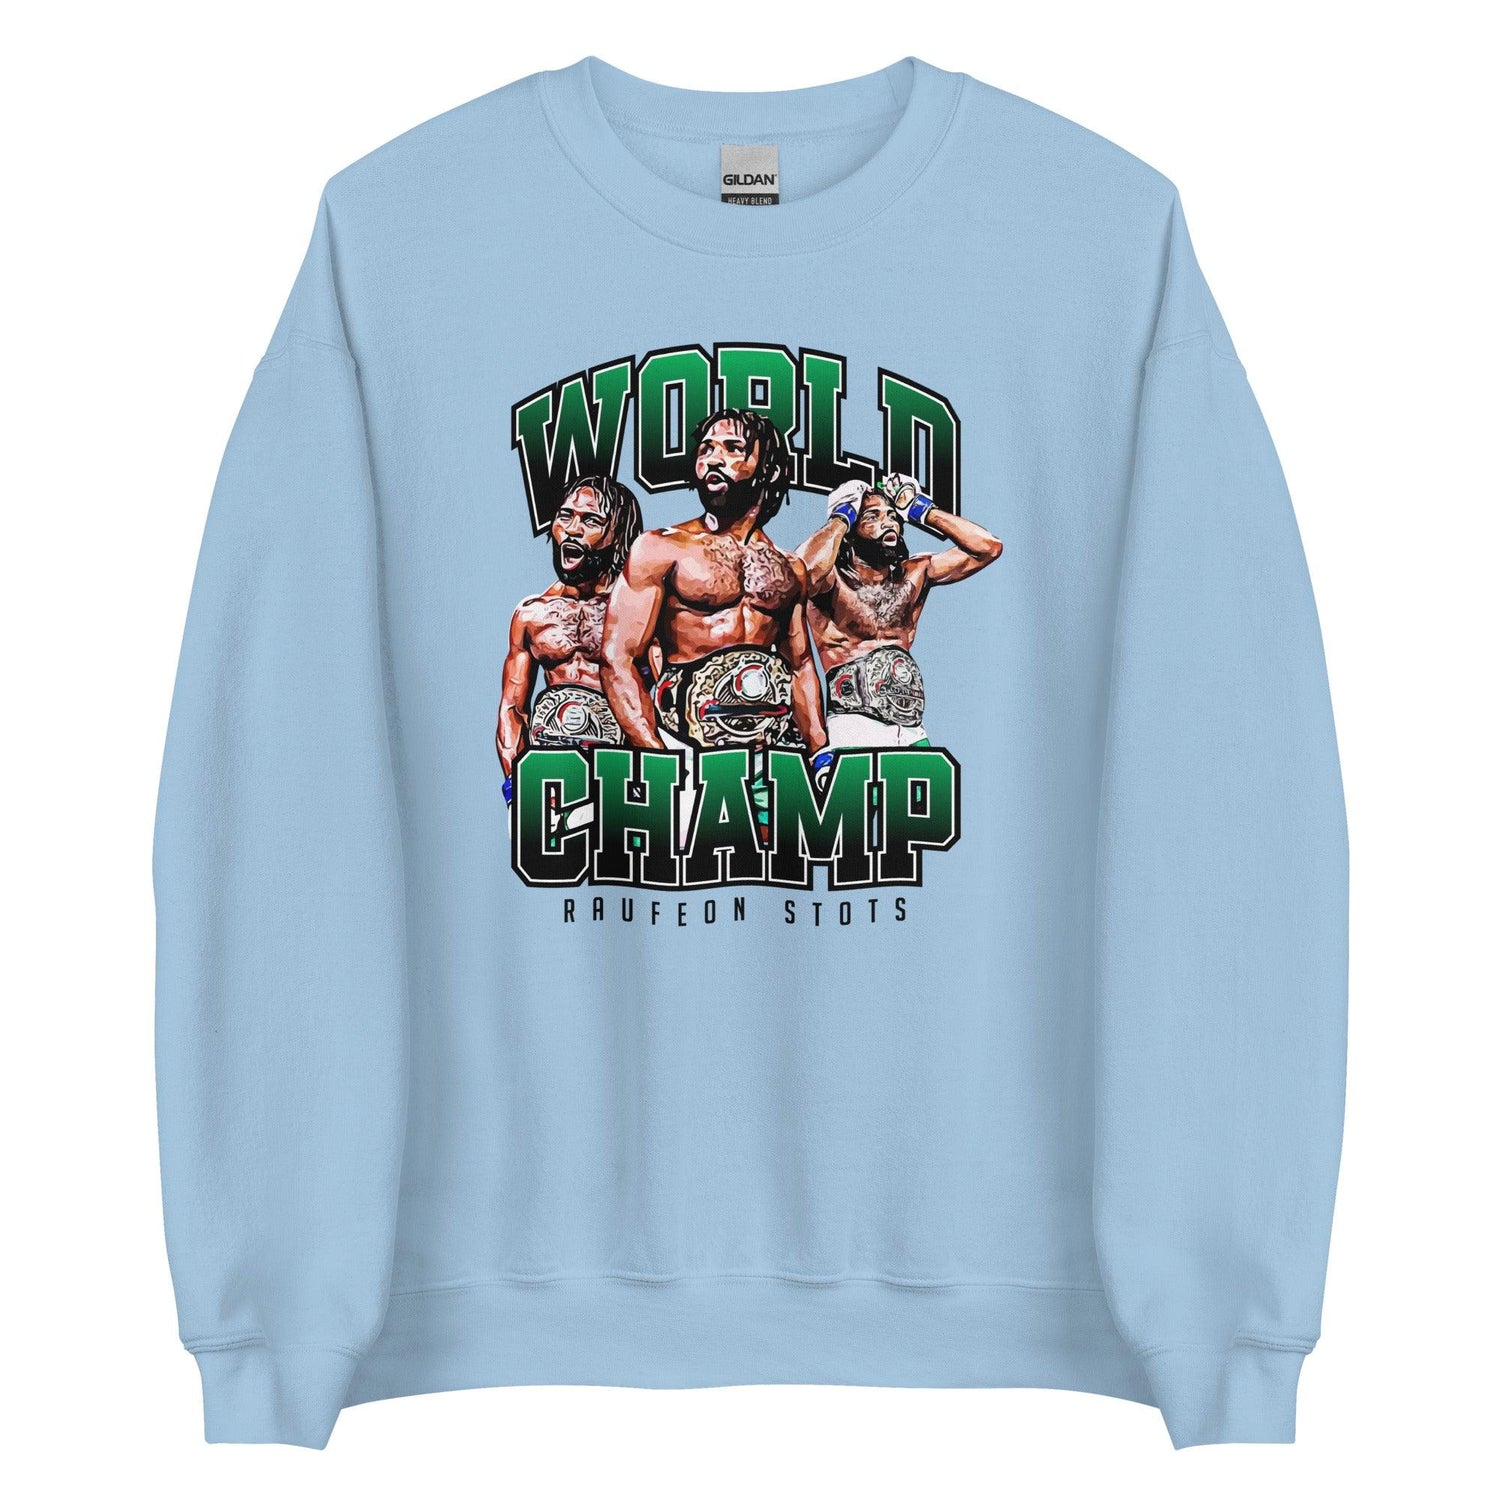 Raufeon Stots "World Champ" Sweatshirt - Fan Arch